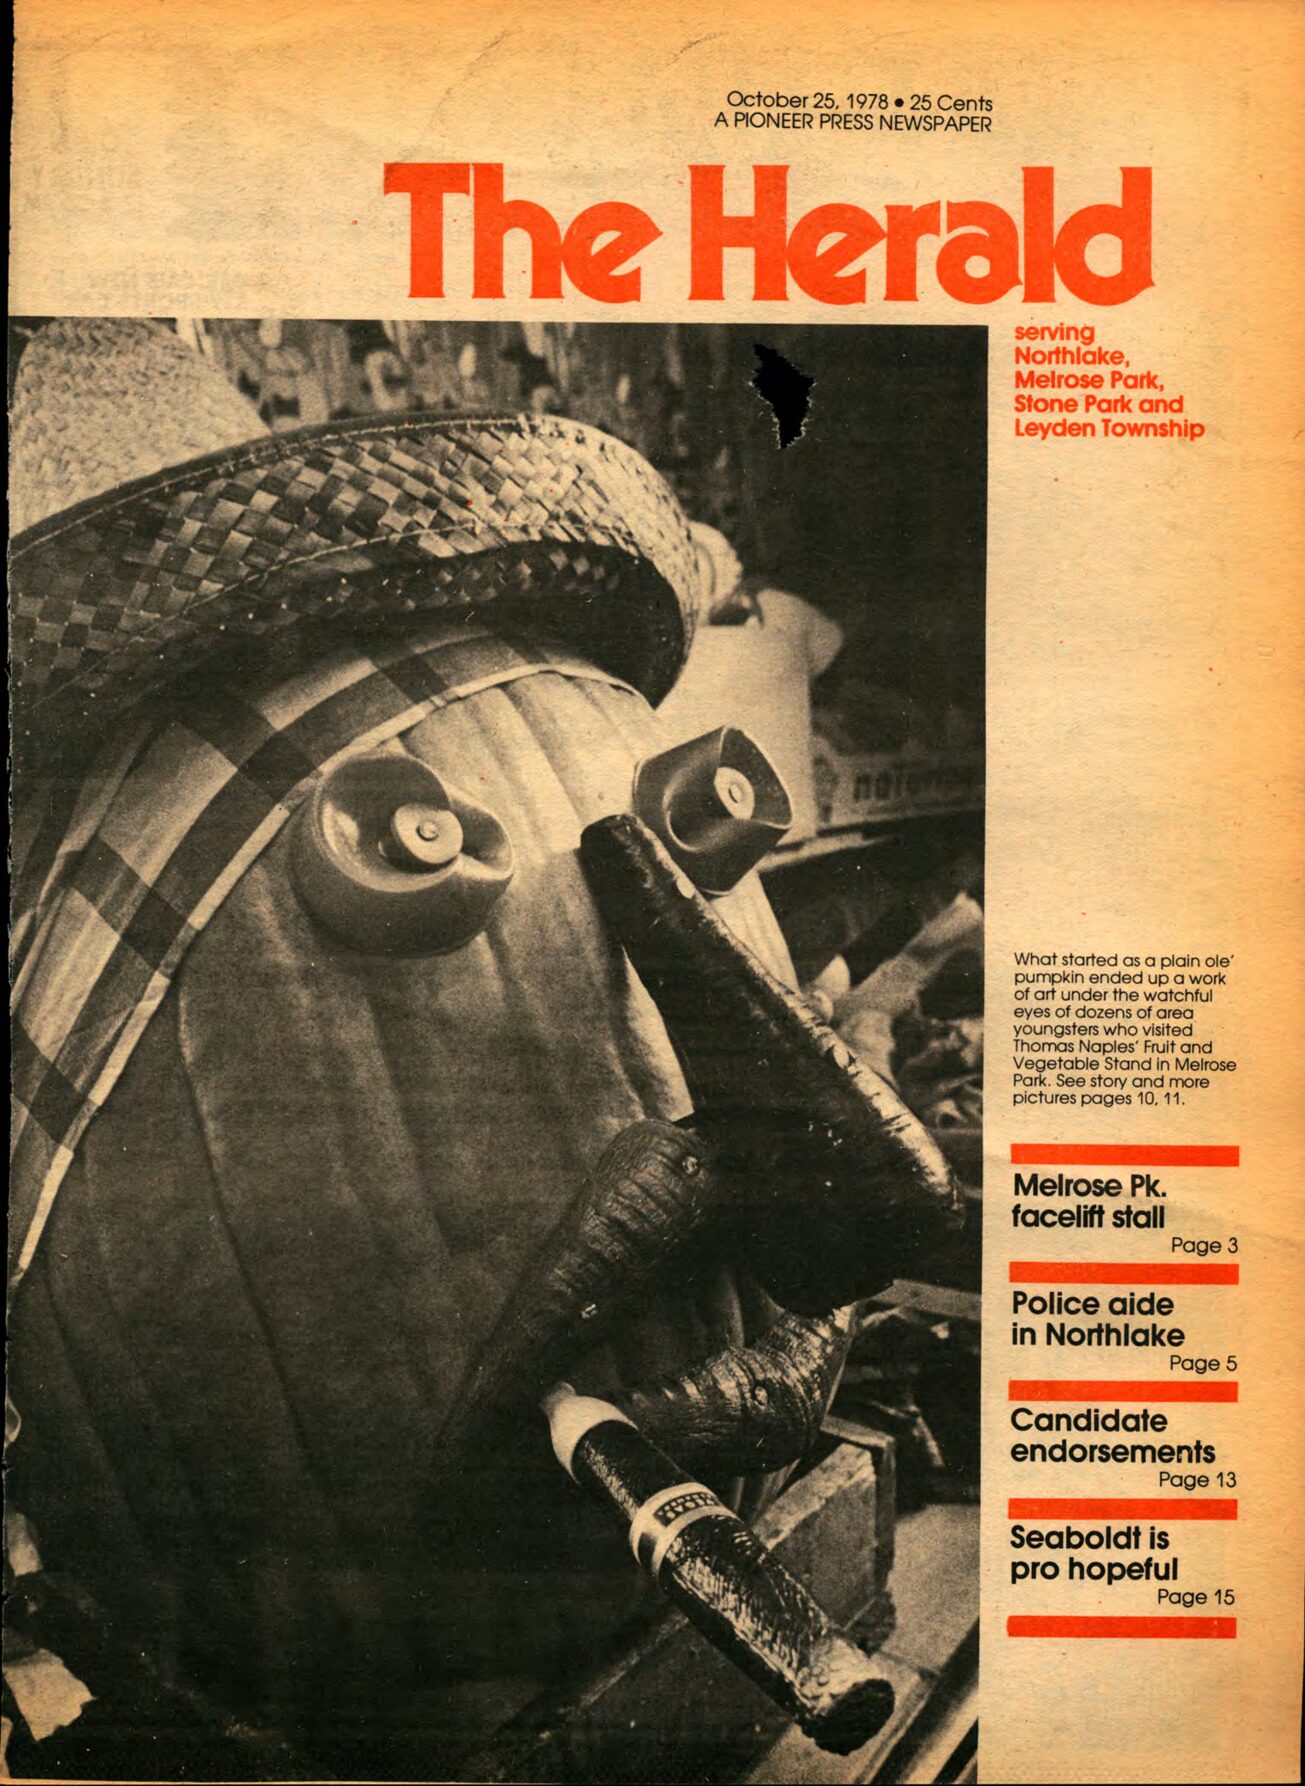 The Herald – 19781025